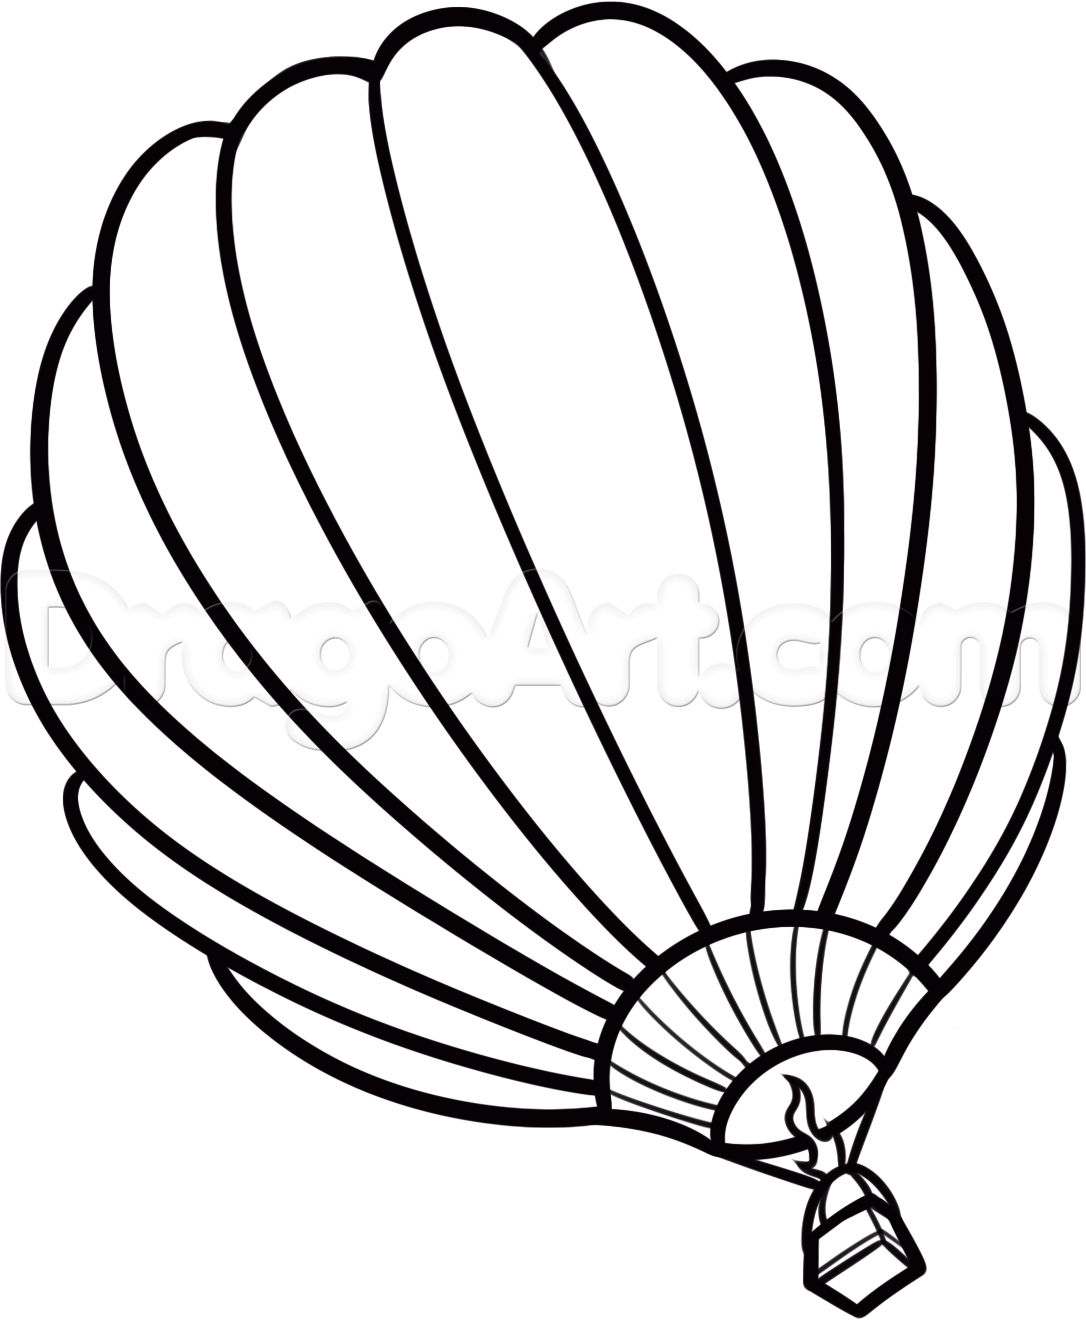 how-to-draw-a-hot-air-balloon-step-6_1_000000176195_5